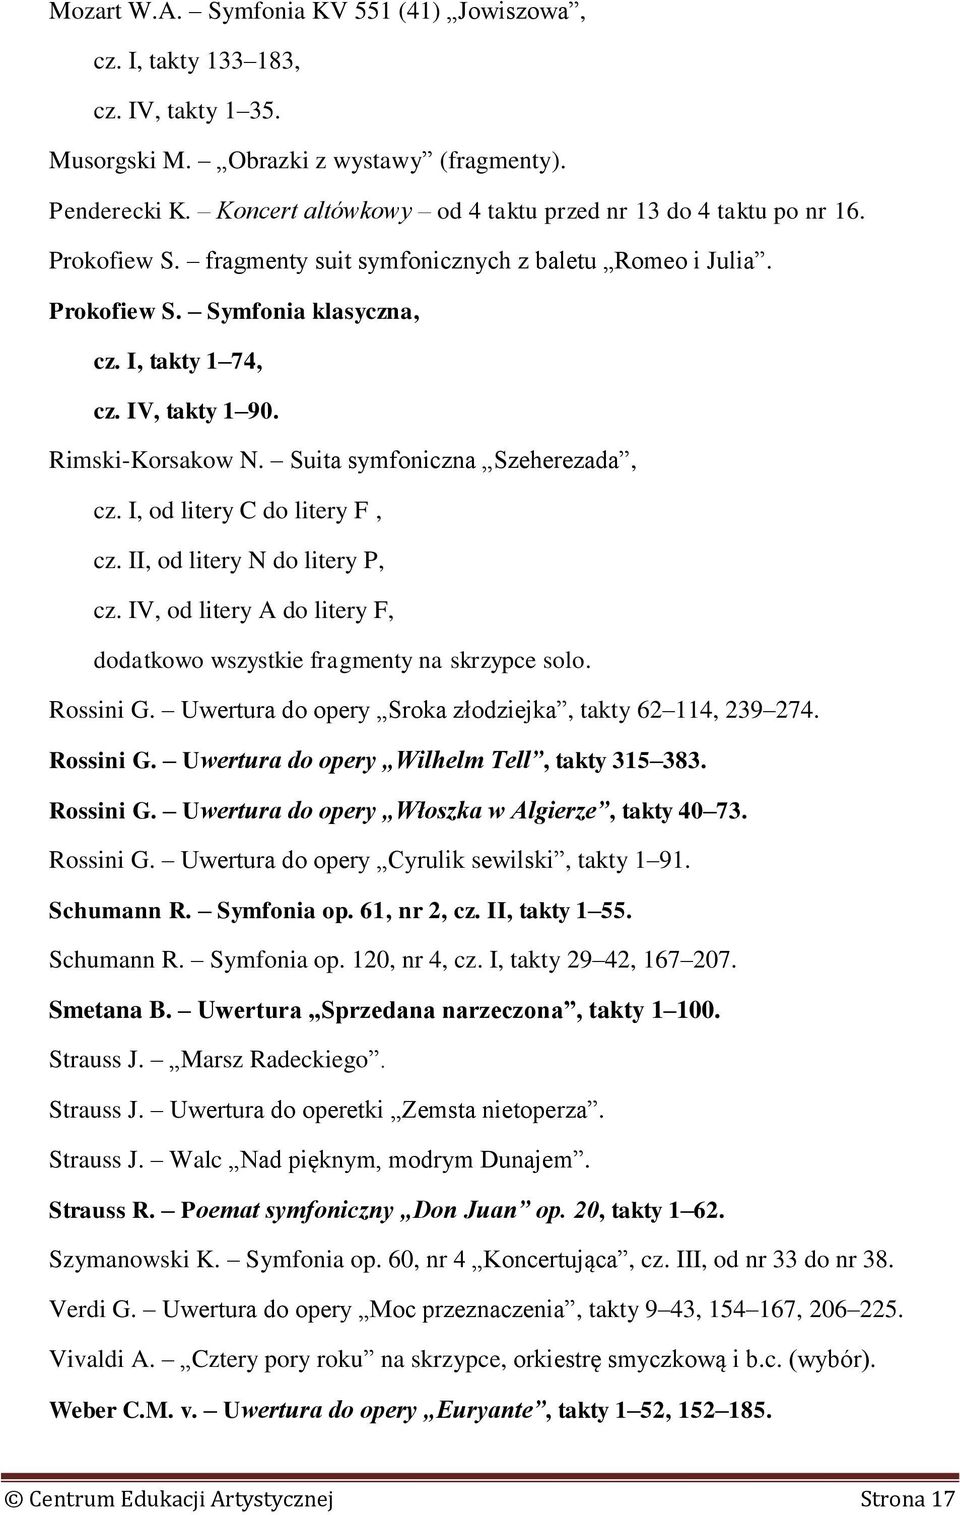 Rimski-Korsakow N. Suita symfoniczna Szeherezada, cz. I, od litery C do litery F, cz. II, od litery N do litery P, cz. IV, od litery A do litery F, dodatkowo wszystkie fragmenty na skrzypce solo.